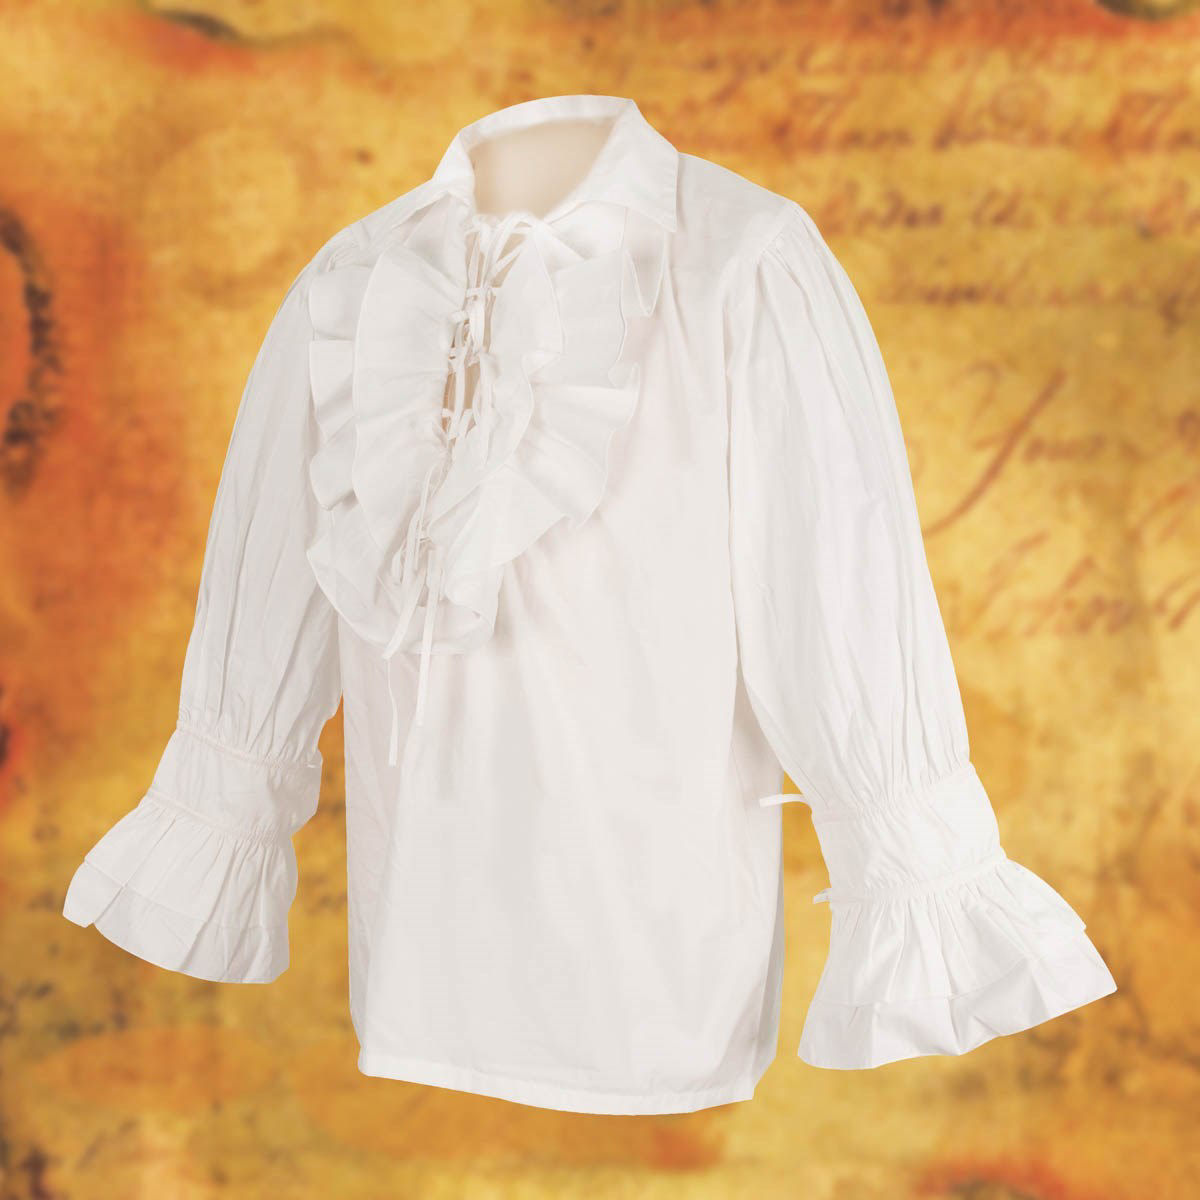 Cotton Tortuga Pirate Shirt at Museum Replicas